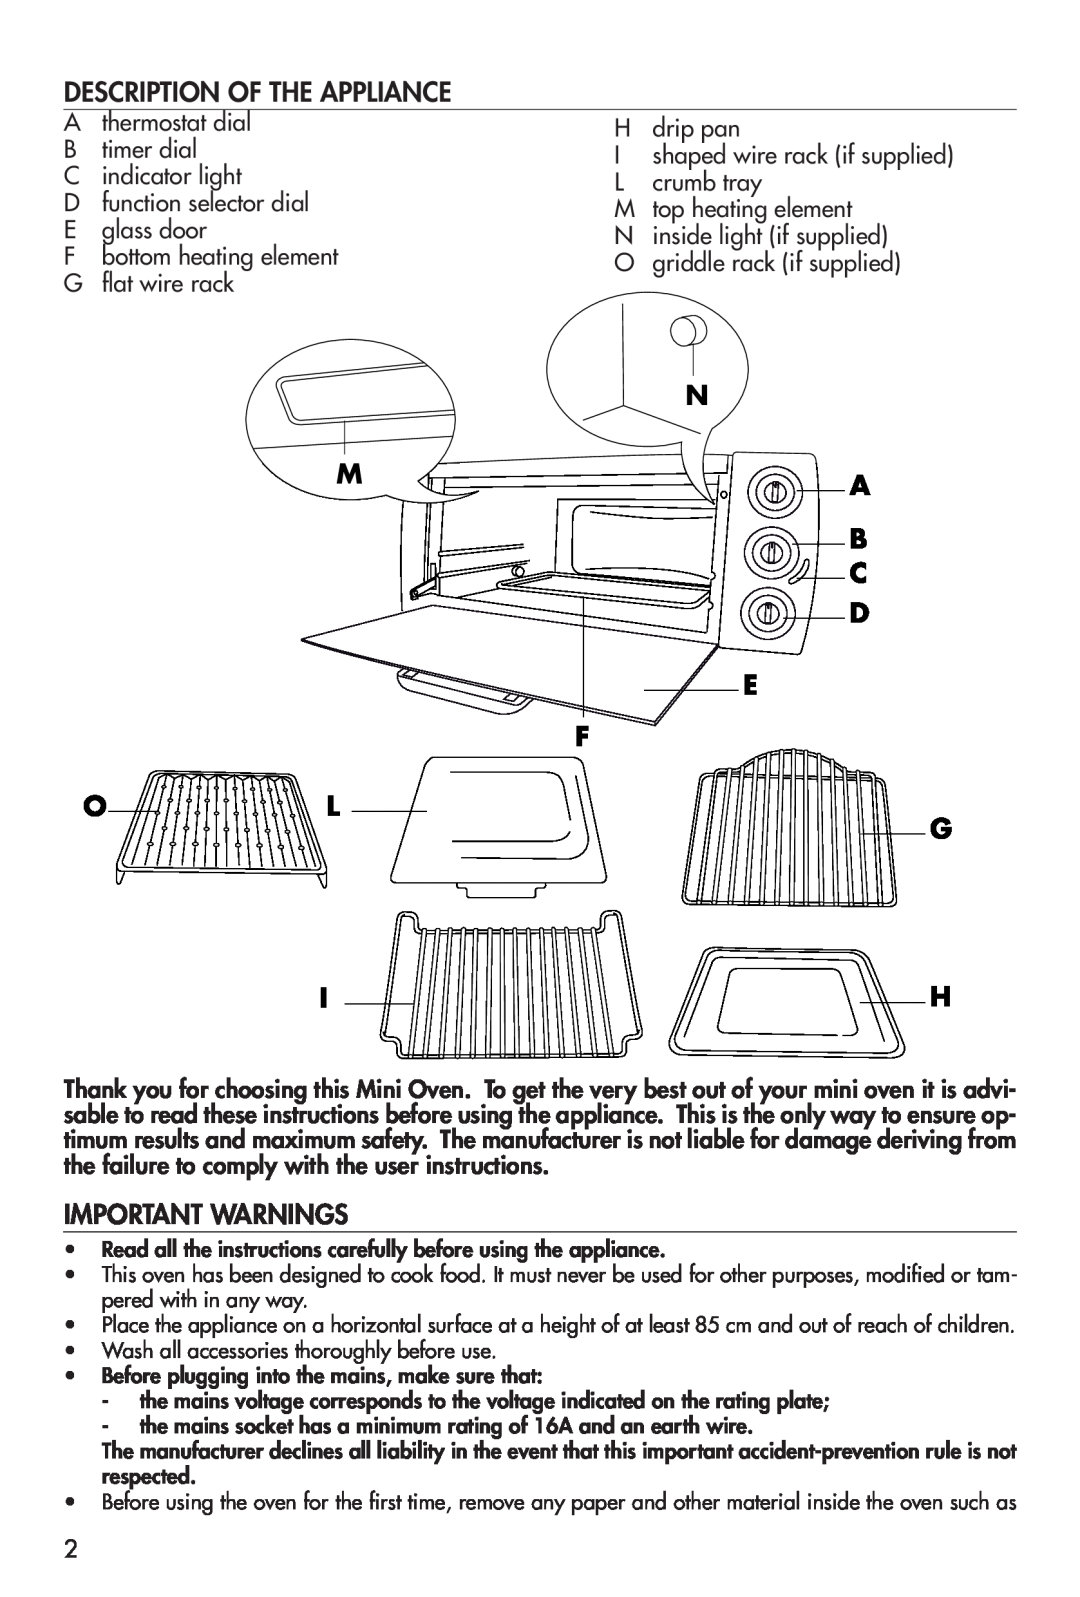 DeLonghi EO12001 manual Description Of The Appliance, Important Warnings, O L G I H 